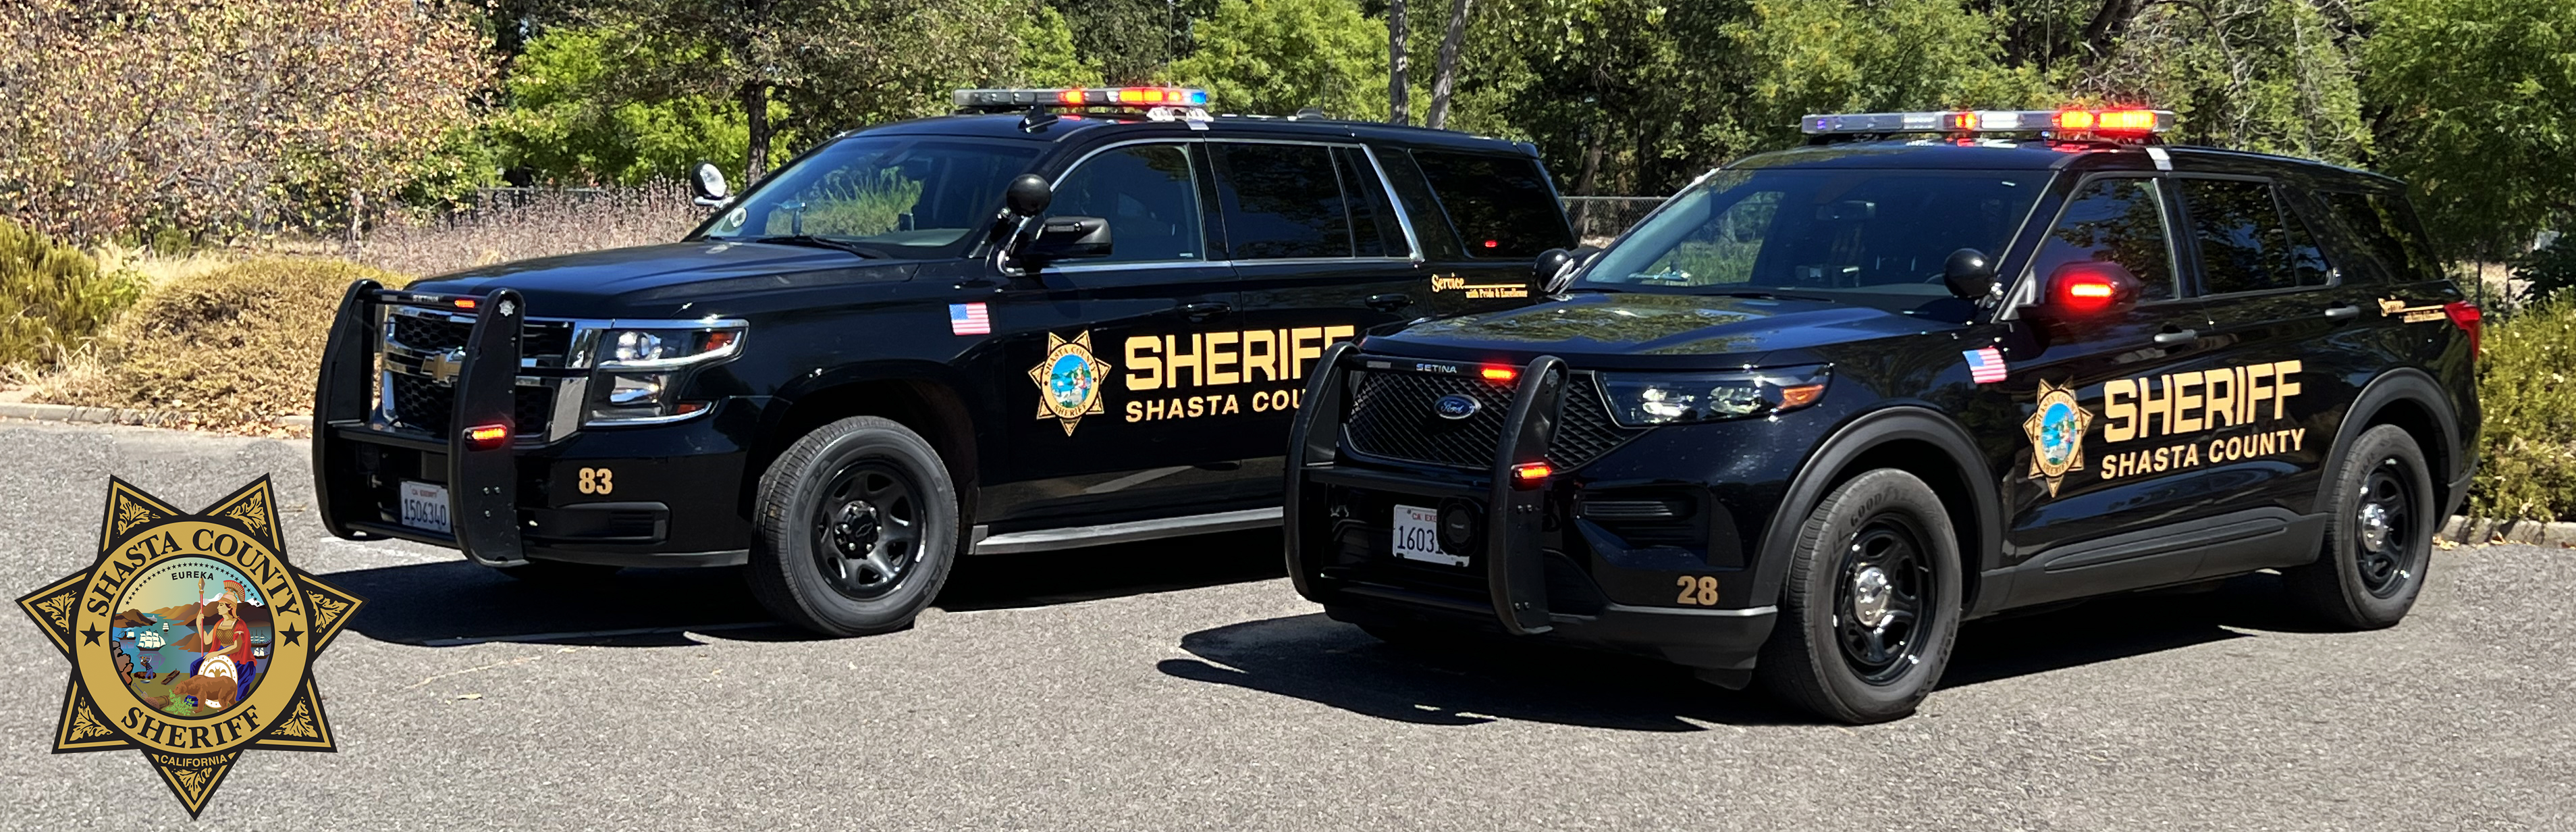 Sheriff's Office  Shasta County California